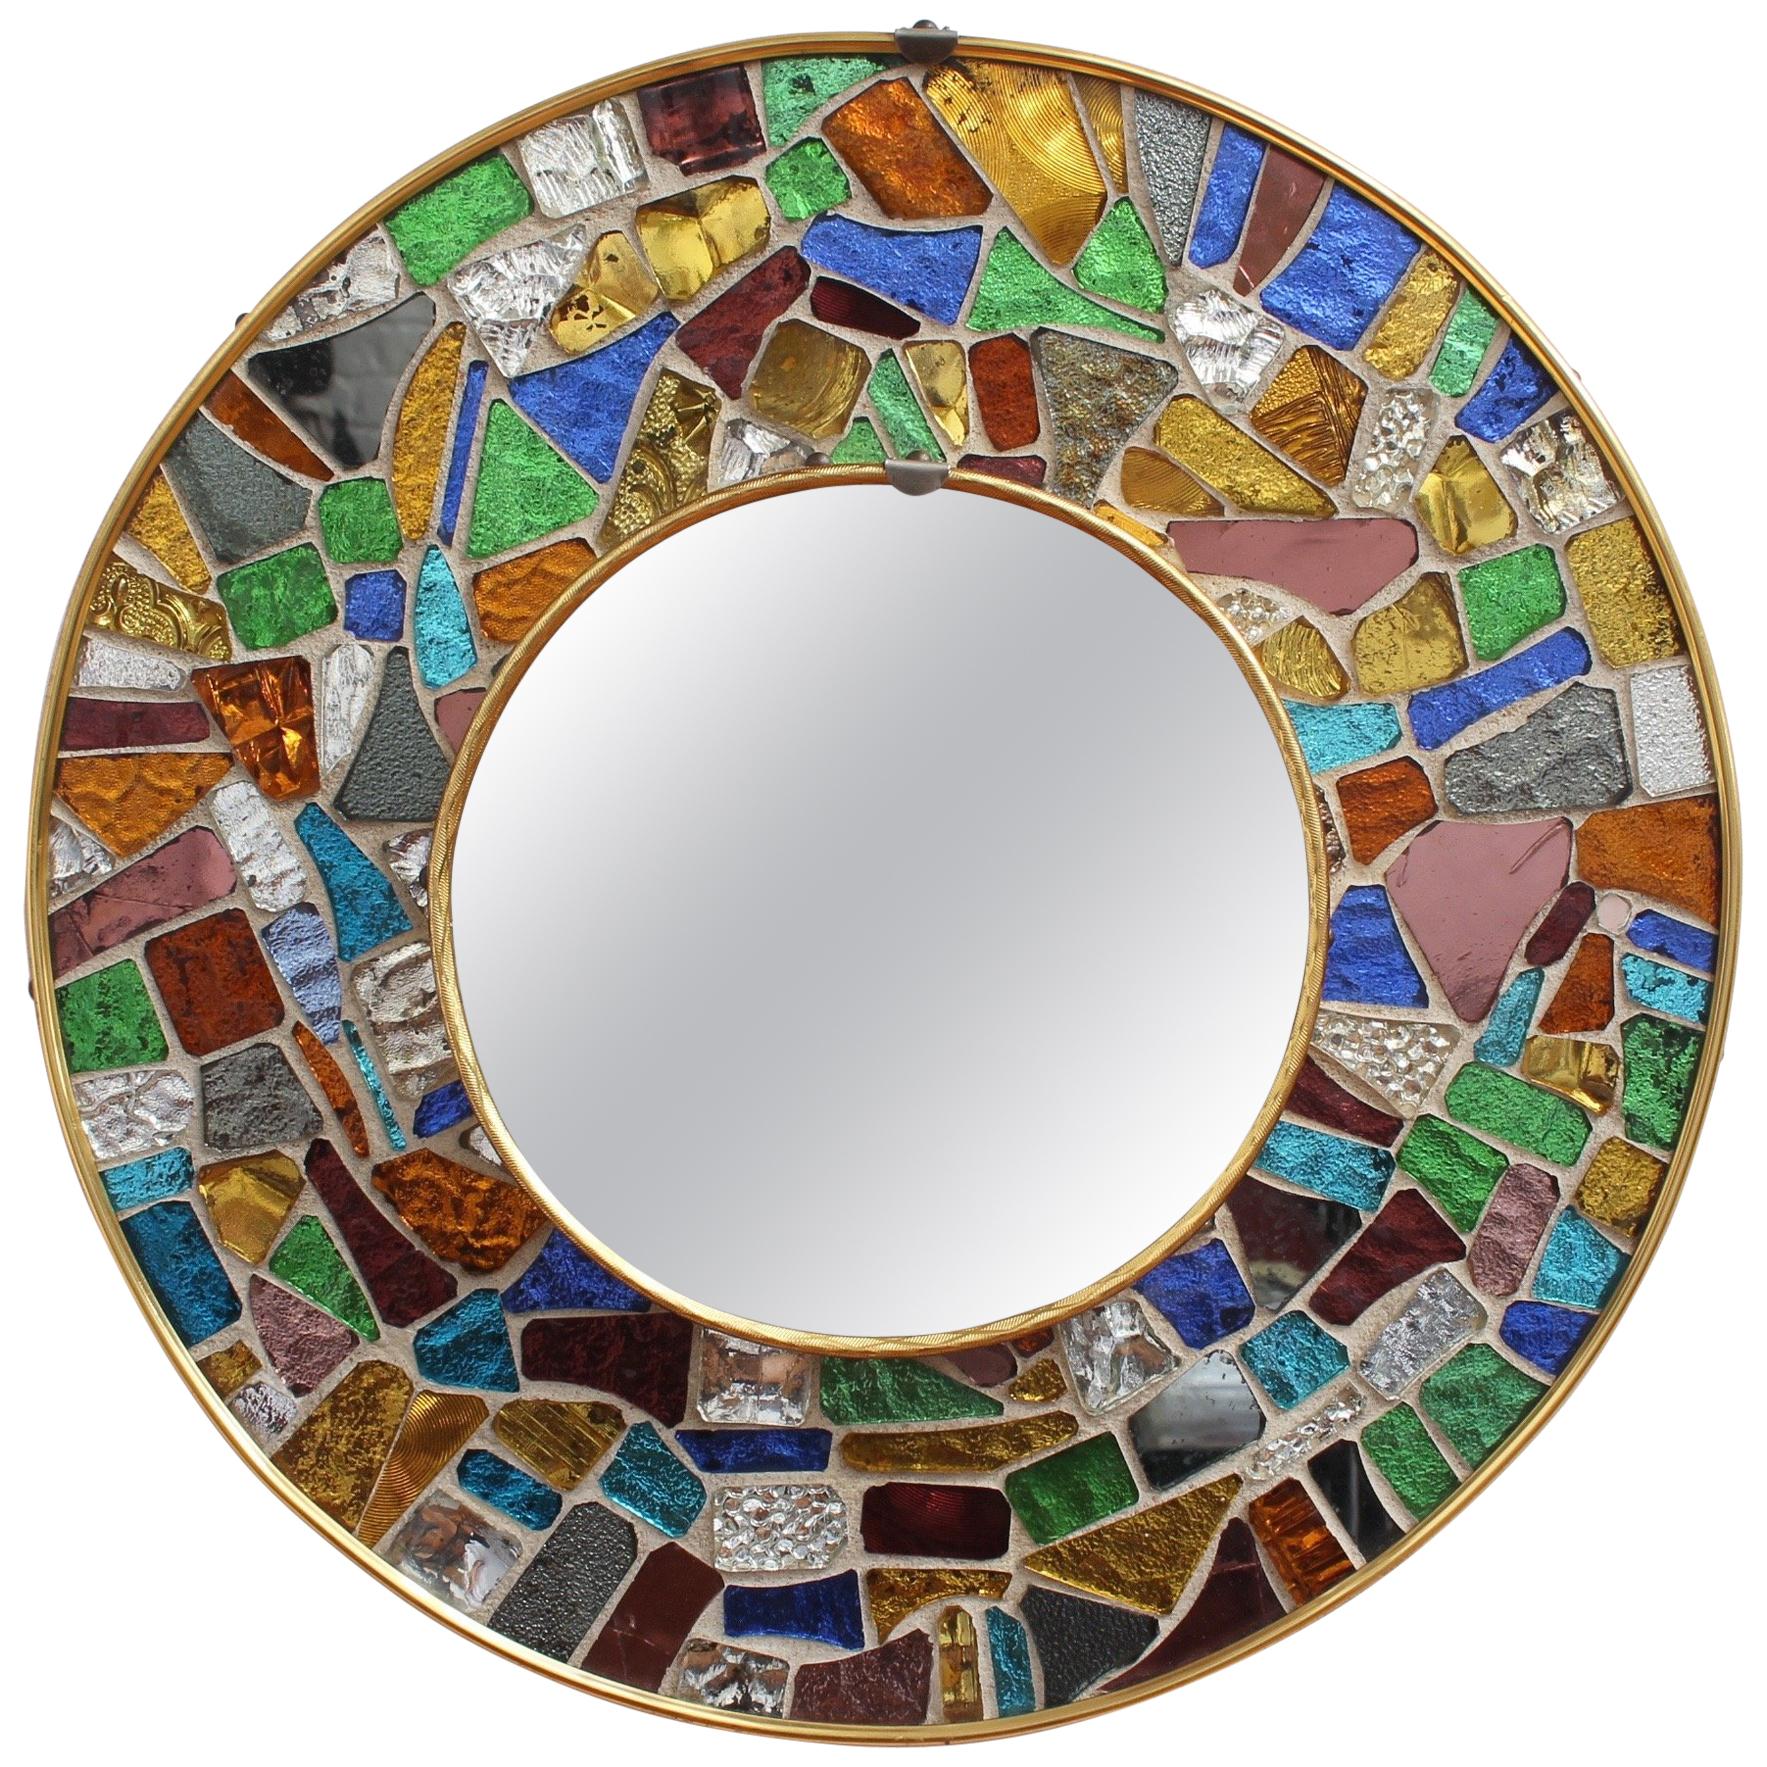 Midcentury Spanish Circular Brass Wall Mirror with Mosaic Surround, circa 1960s